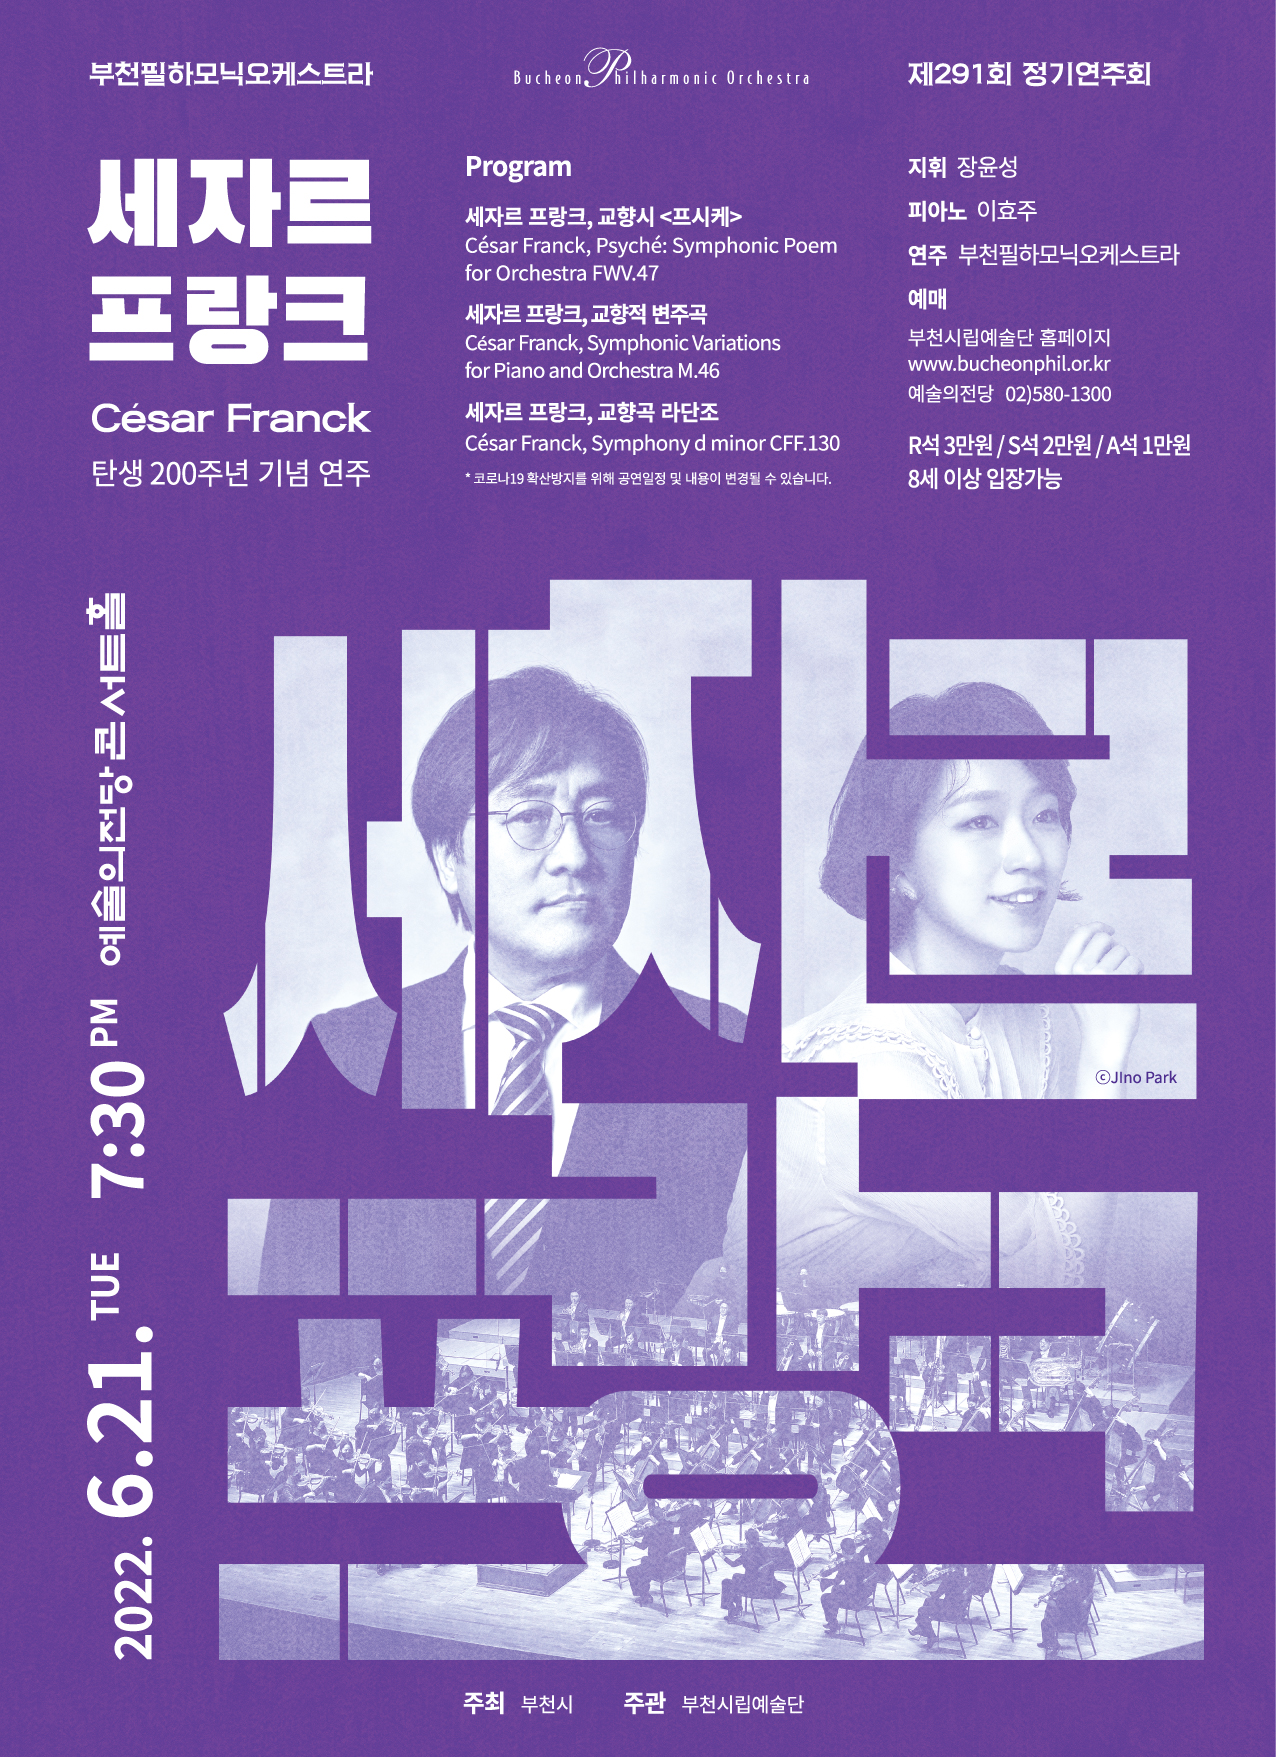 [6.21]Bucheon Philharmonic Orchestra 291st Subscription Concert